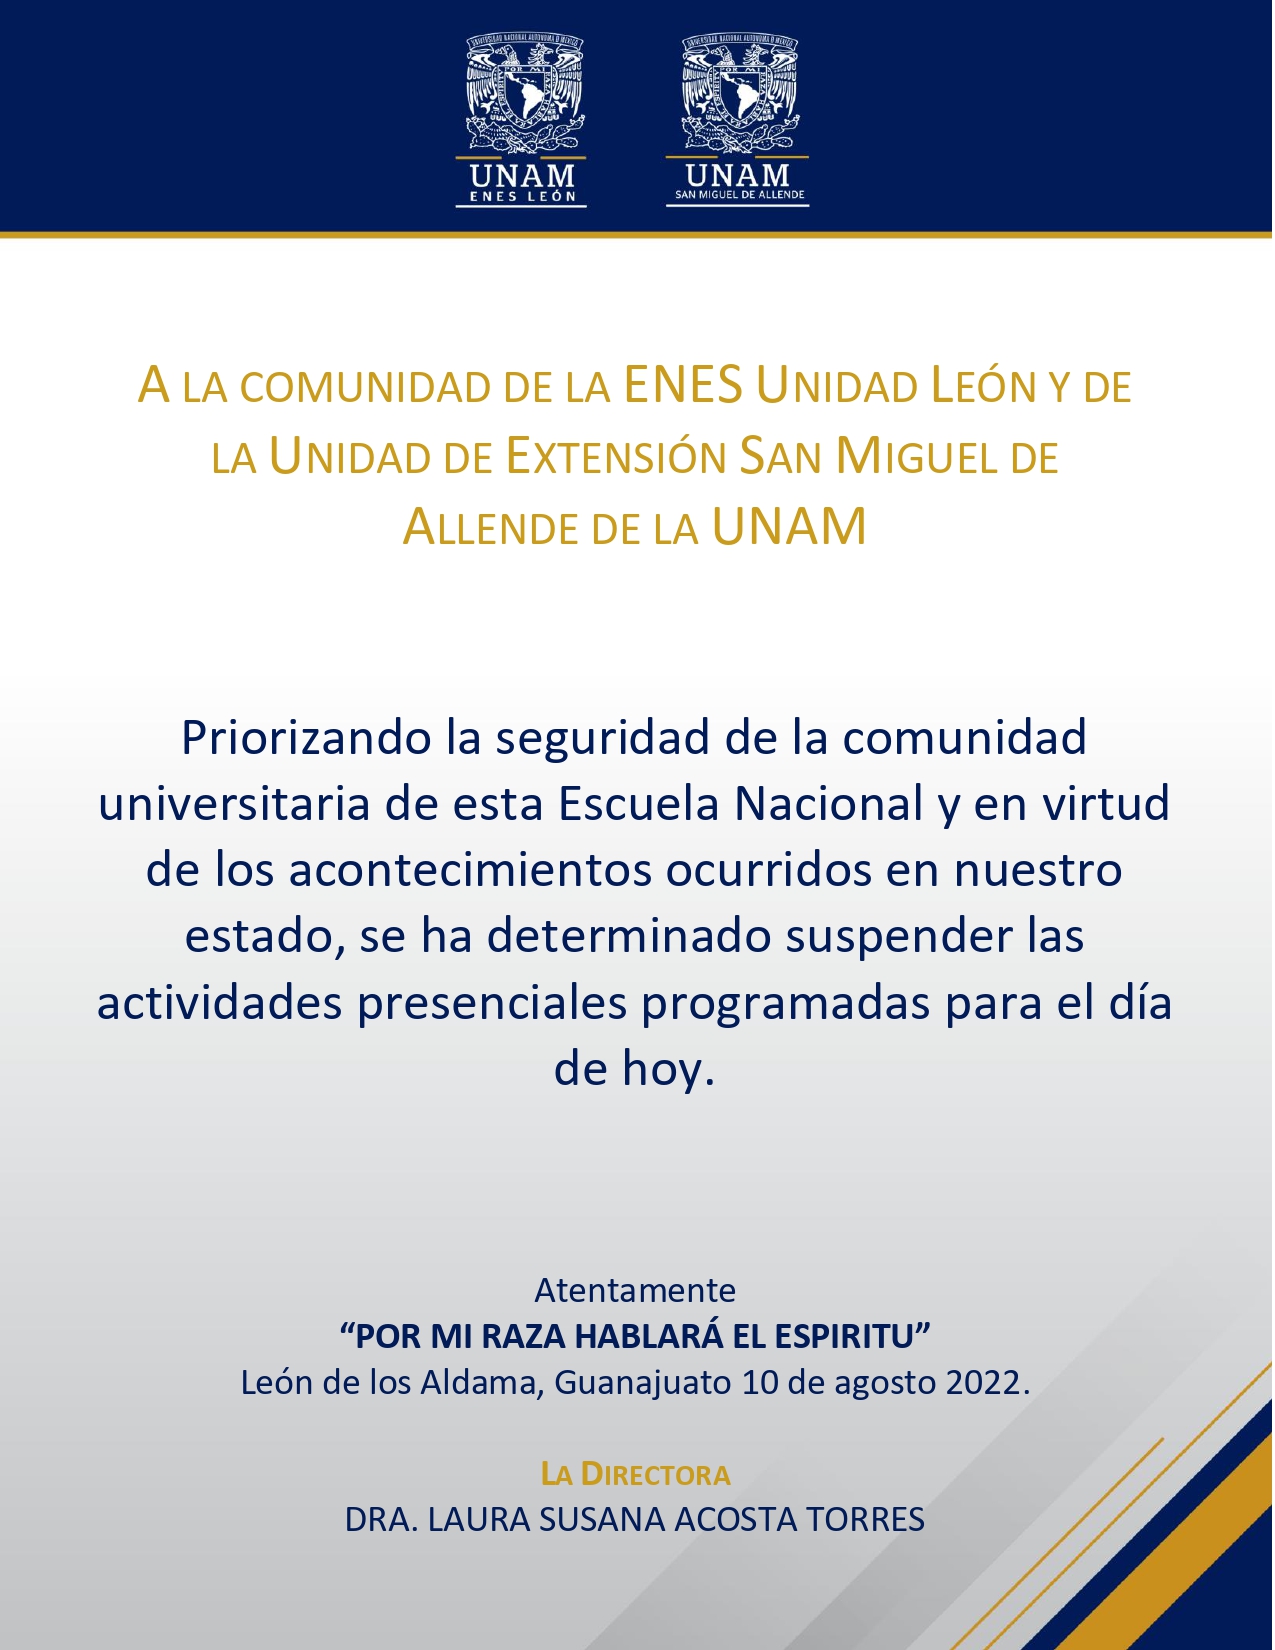 ENES León from UNAM also announced the cancellation of classes.  (Photo: Facebook ENES Leon, UNAM)